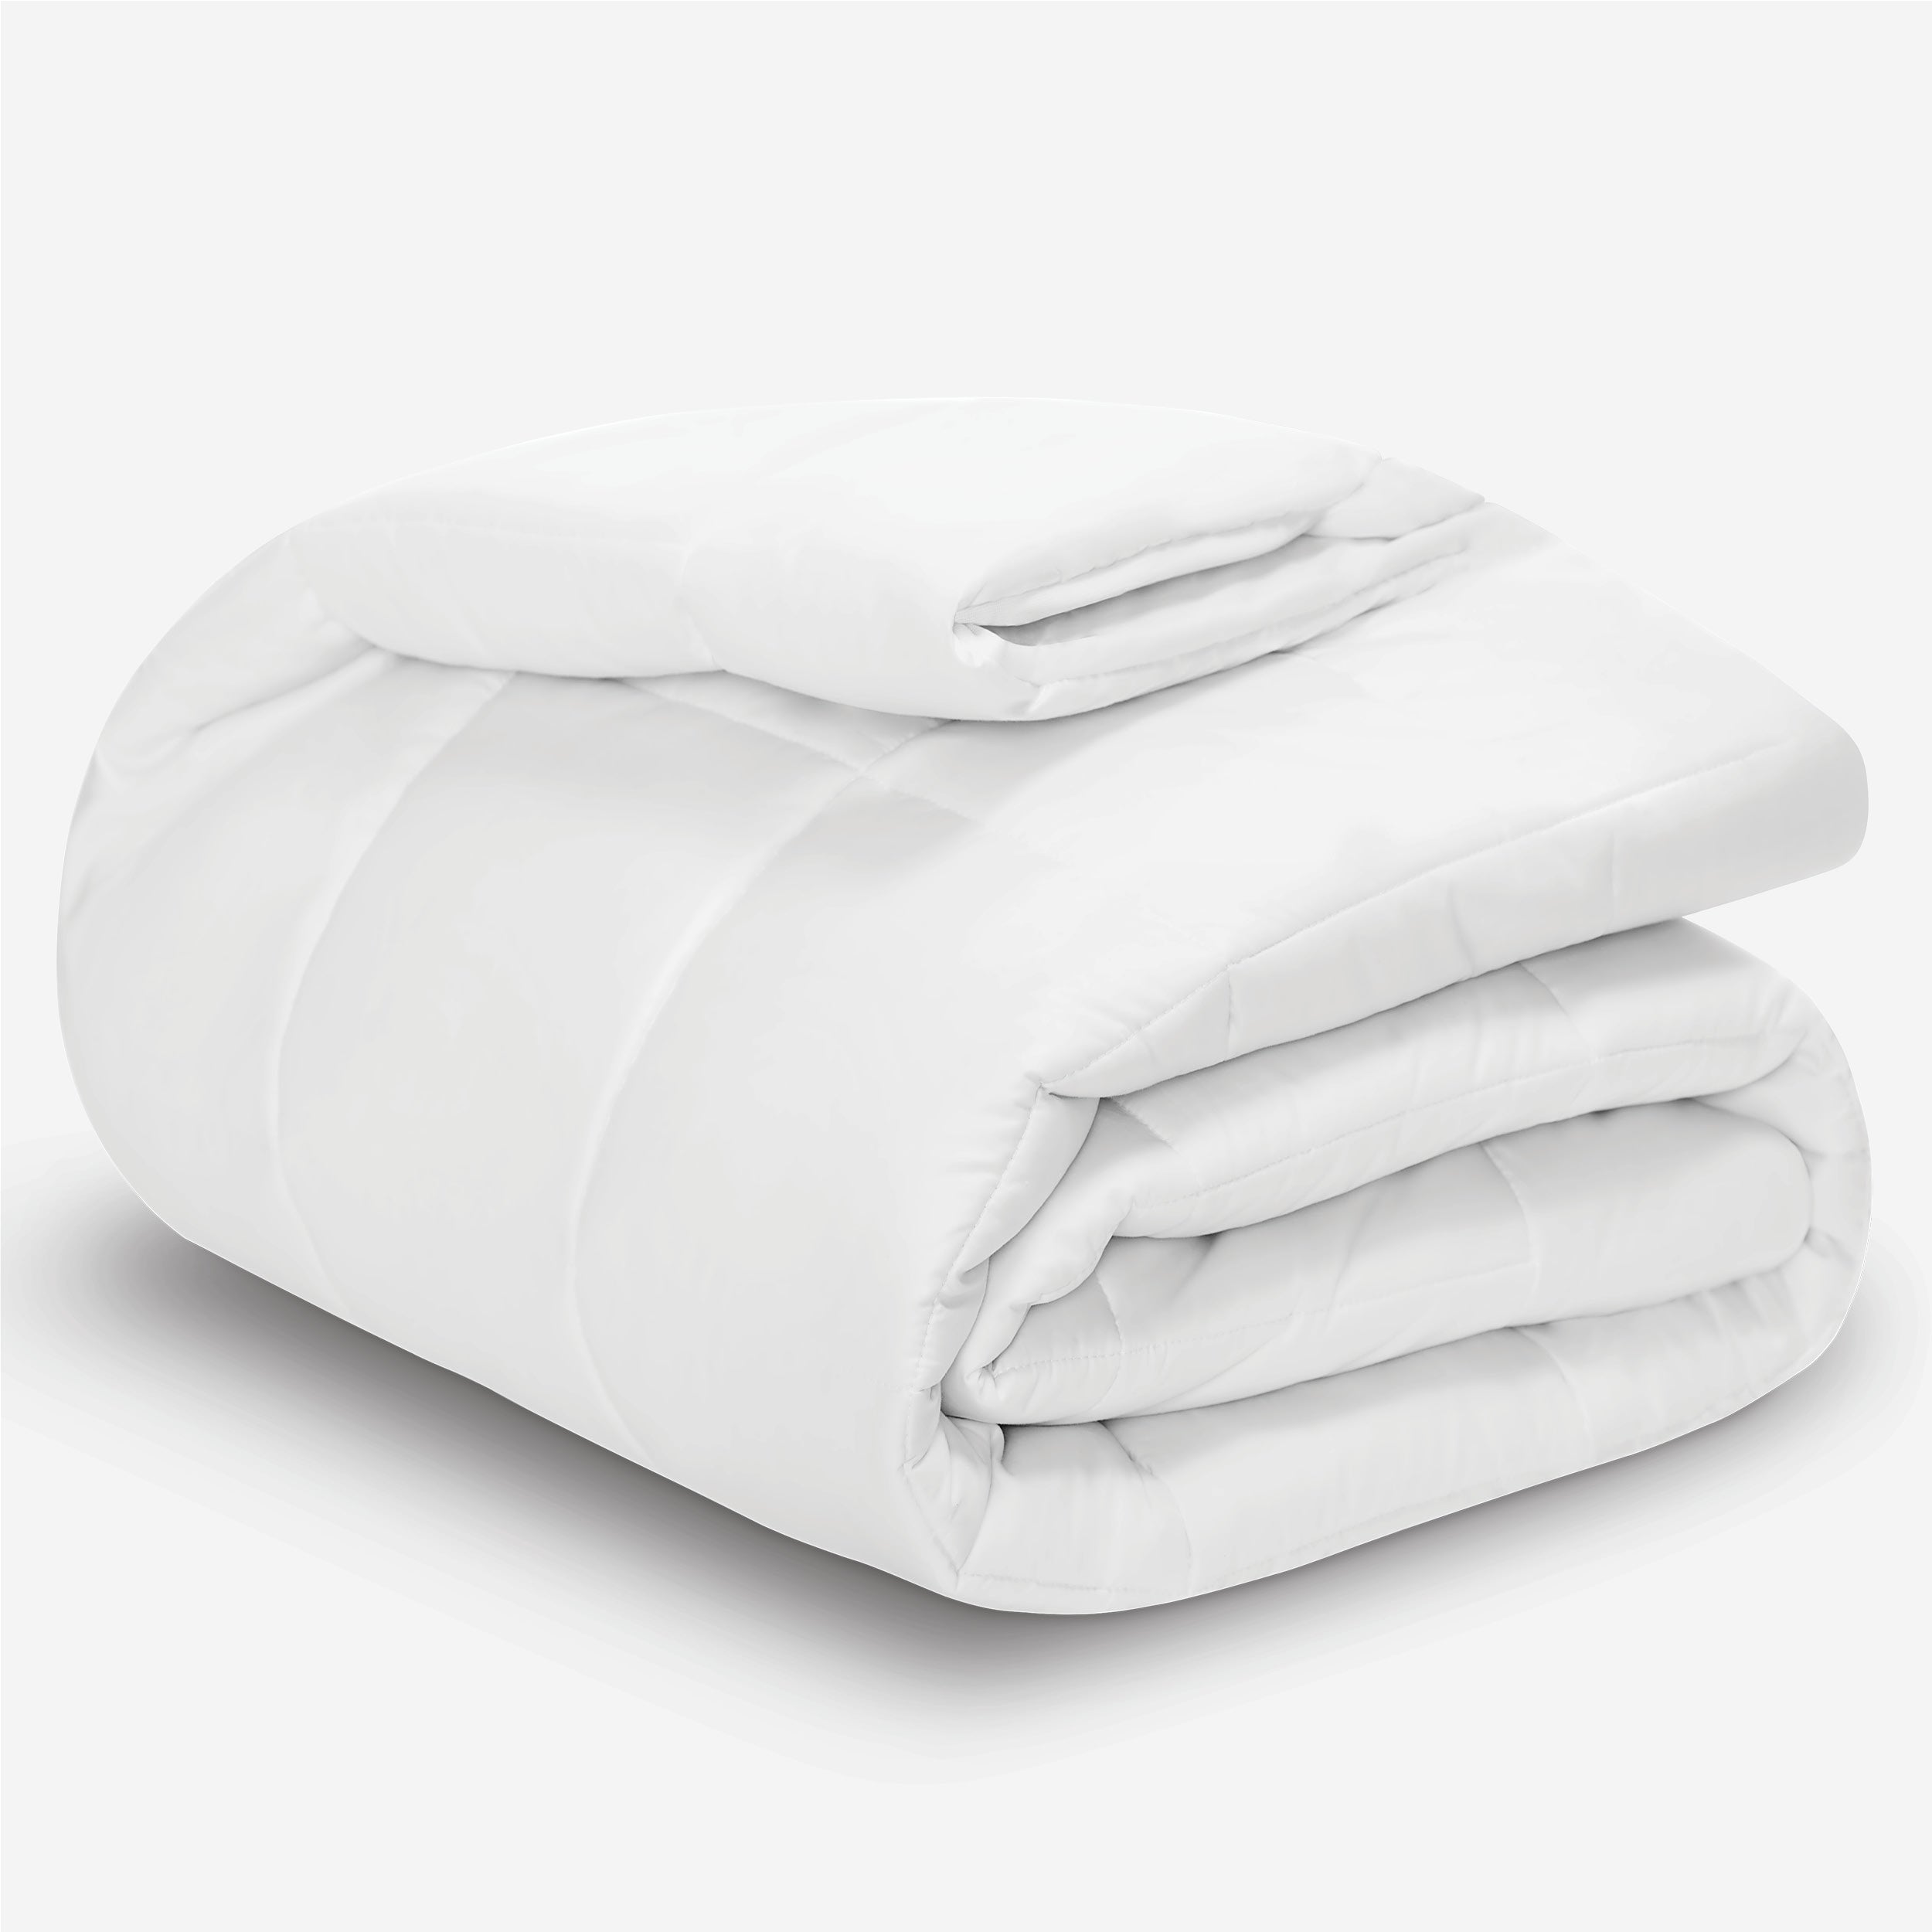 A cotton top mattress pad folded